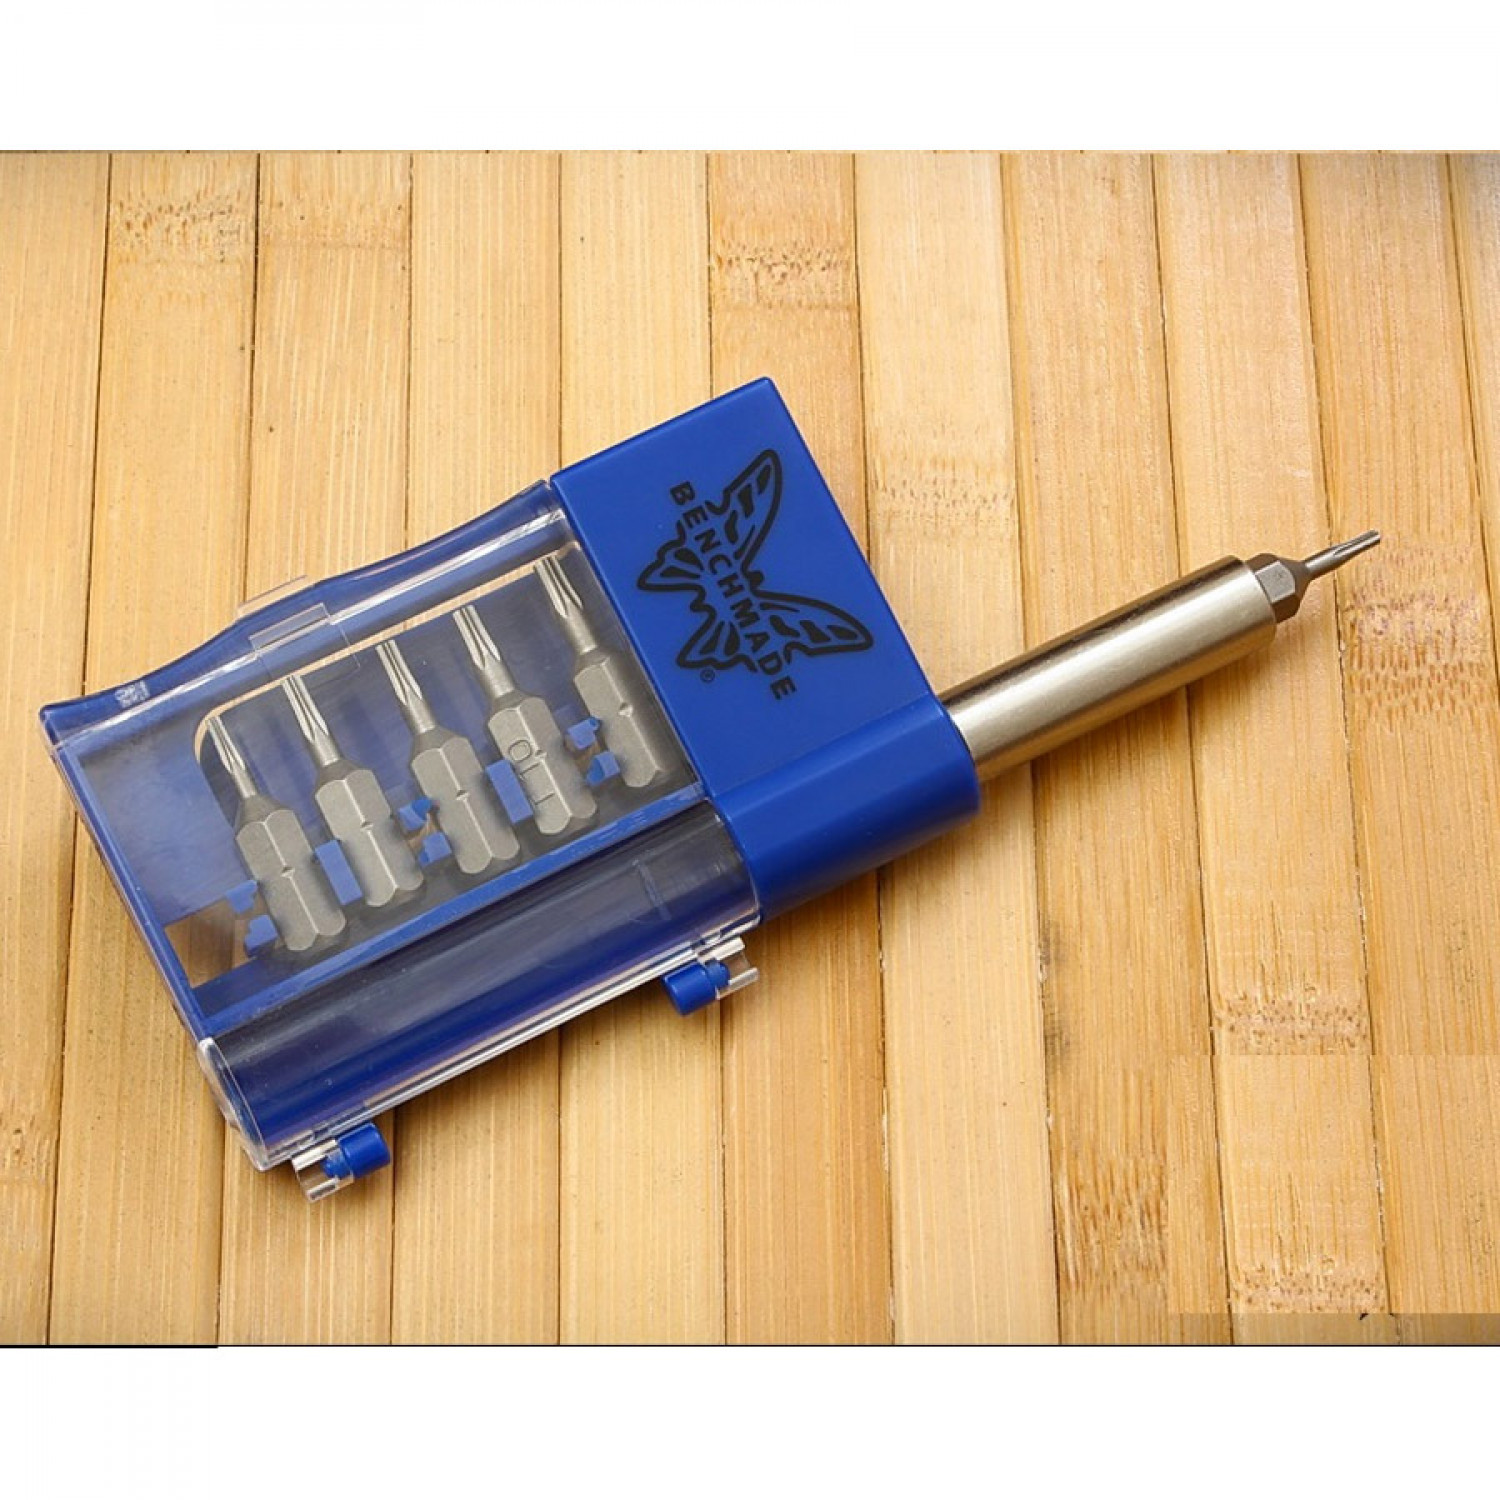 Набор отверток для ножей Benchmade BlueBox Tool Kit 981084F от Ножиков